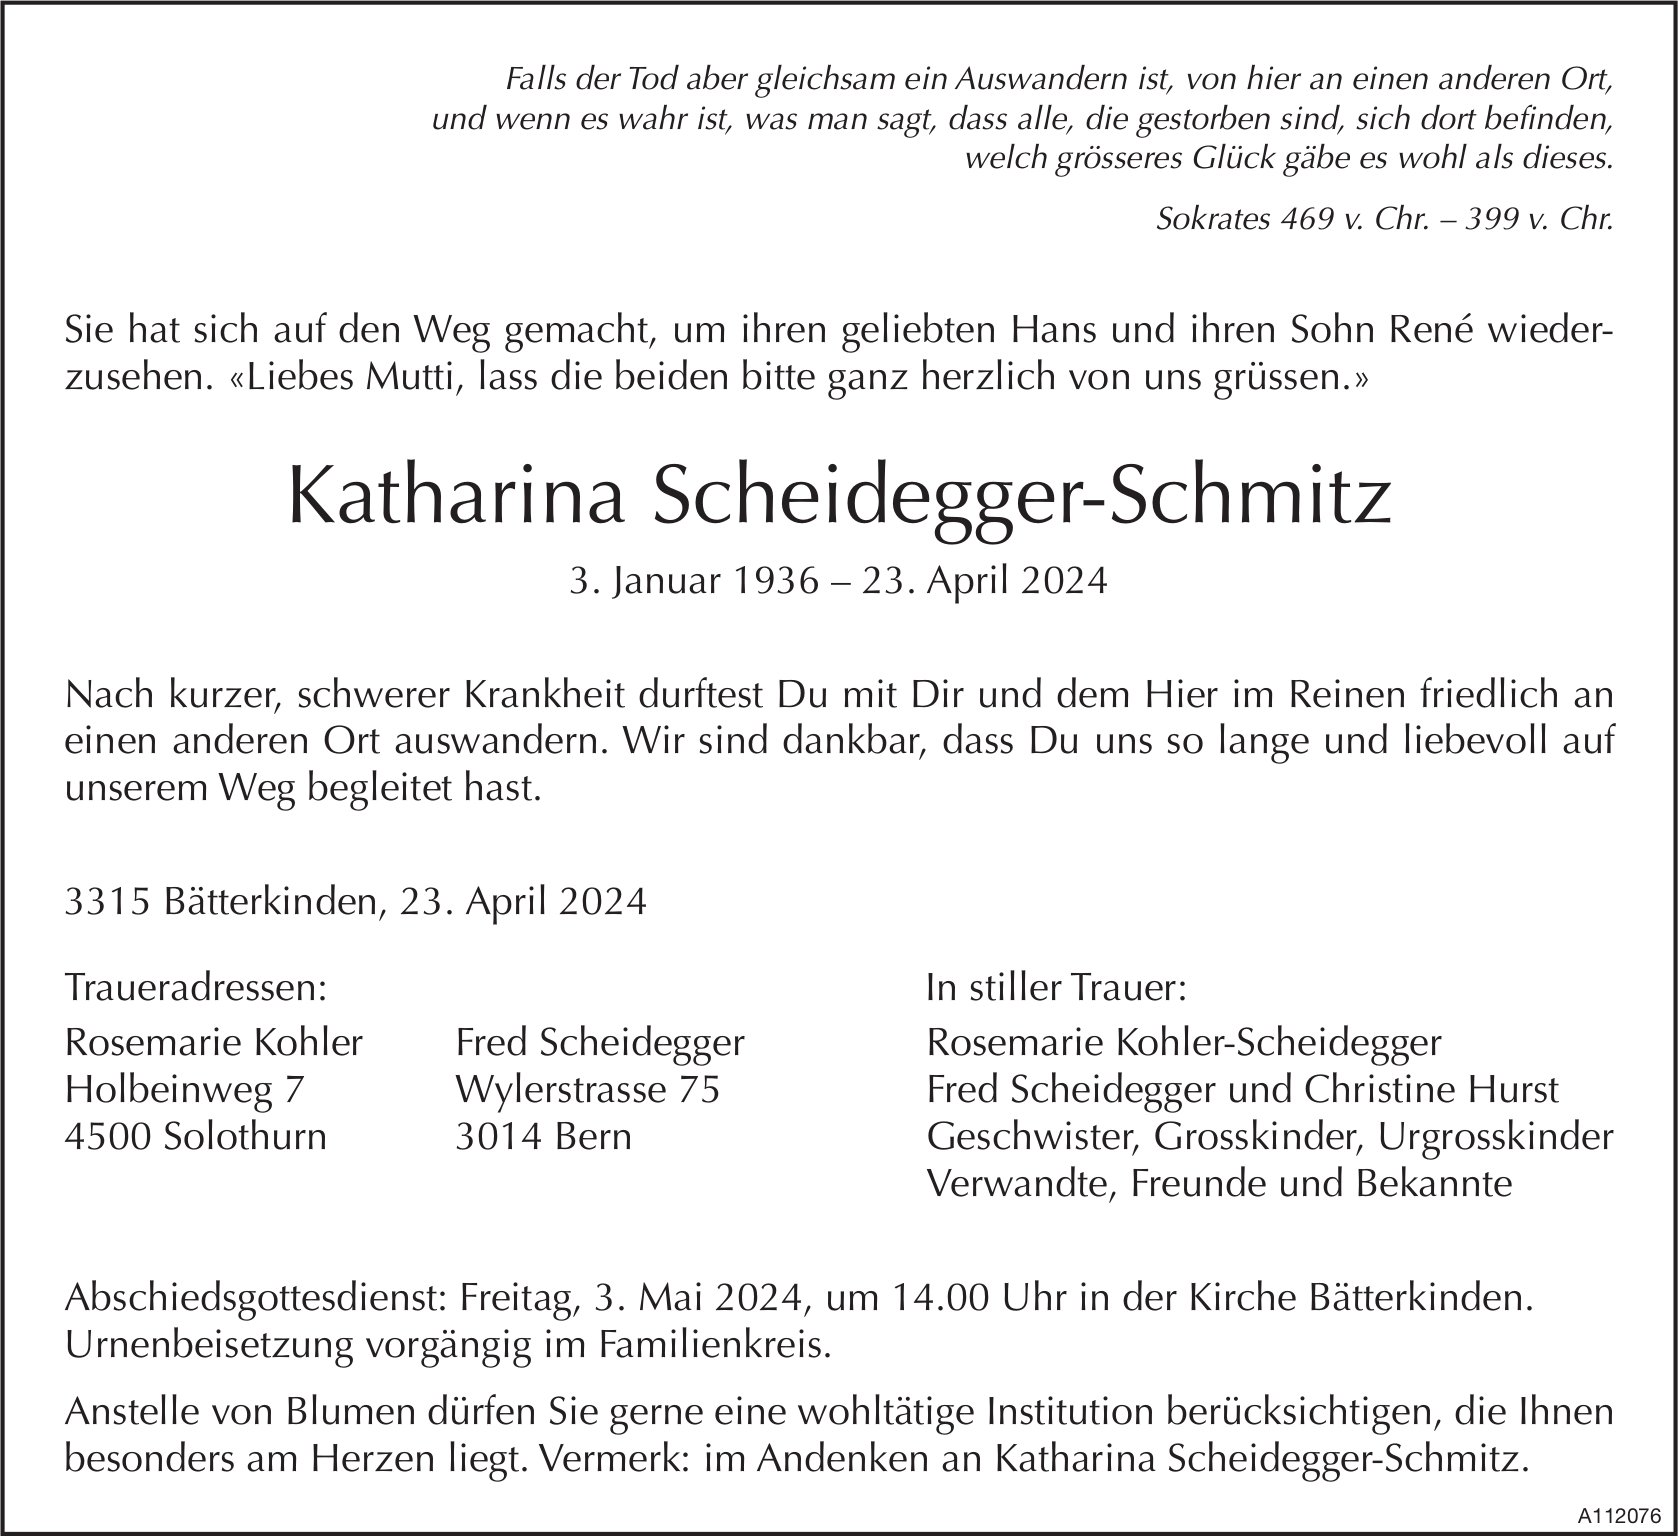 Katharina Scheidegger-Schmitz, April 2024 / TA